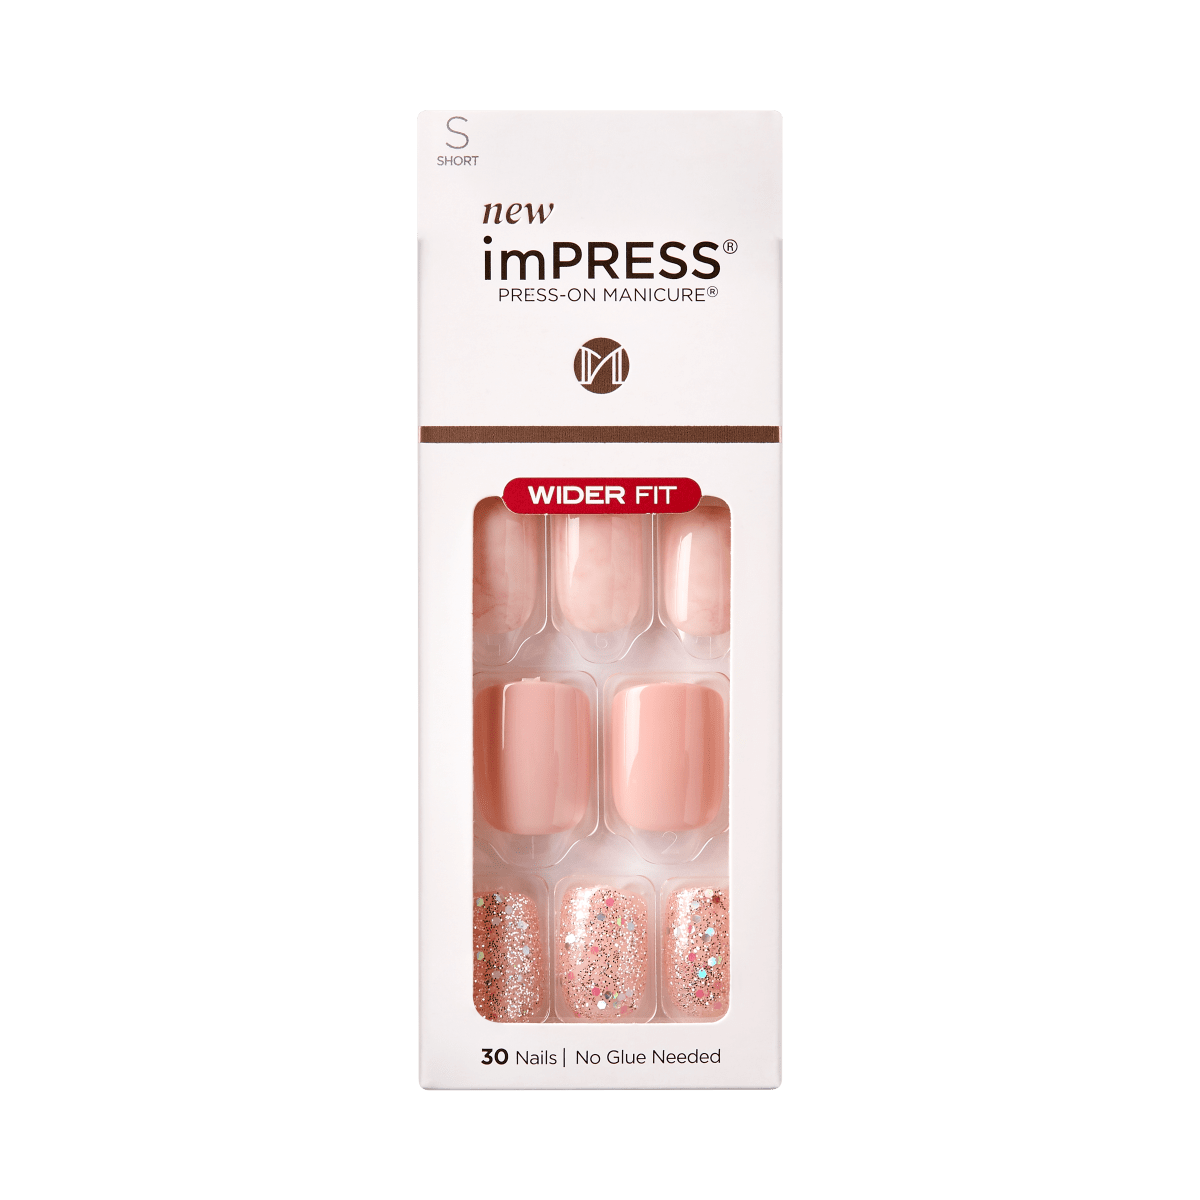 KISS imPRESS Press-On Nails Wide Fit Fake Nails Manicure Set - Just a ...